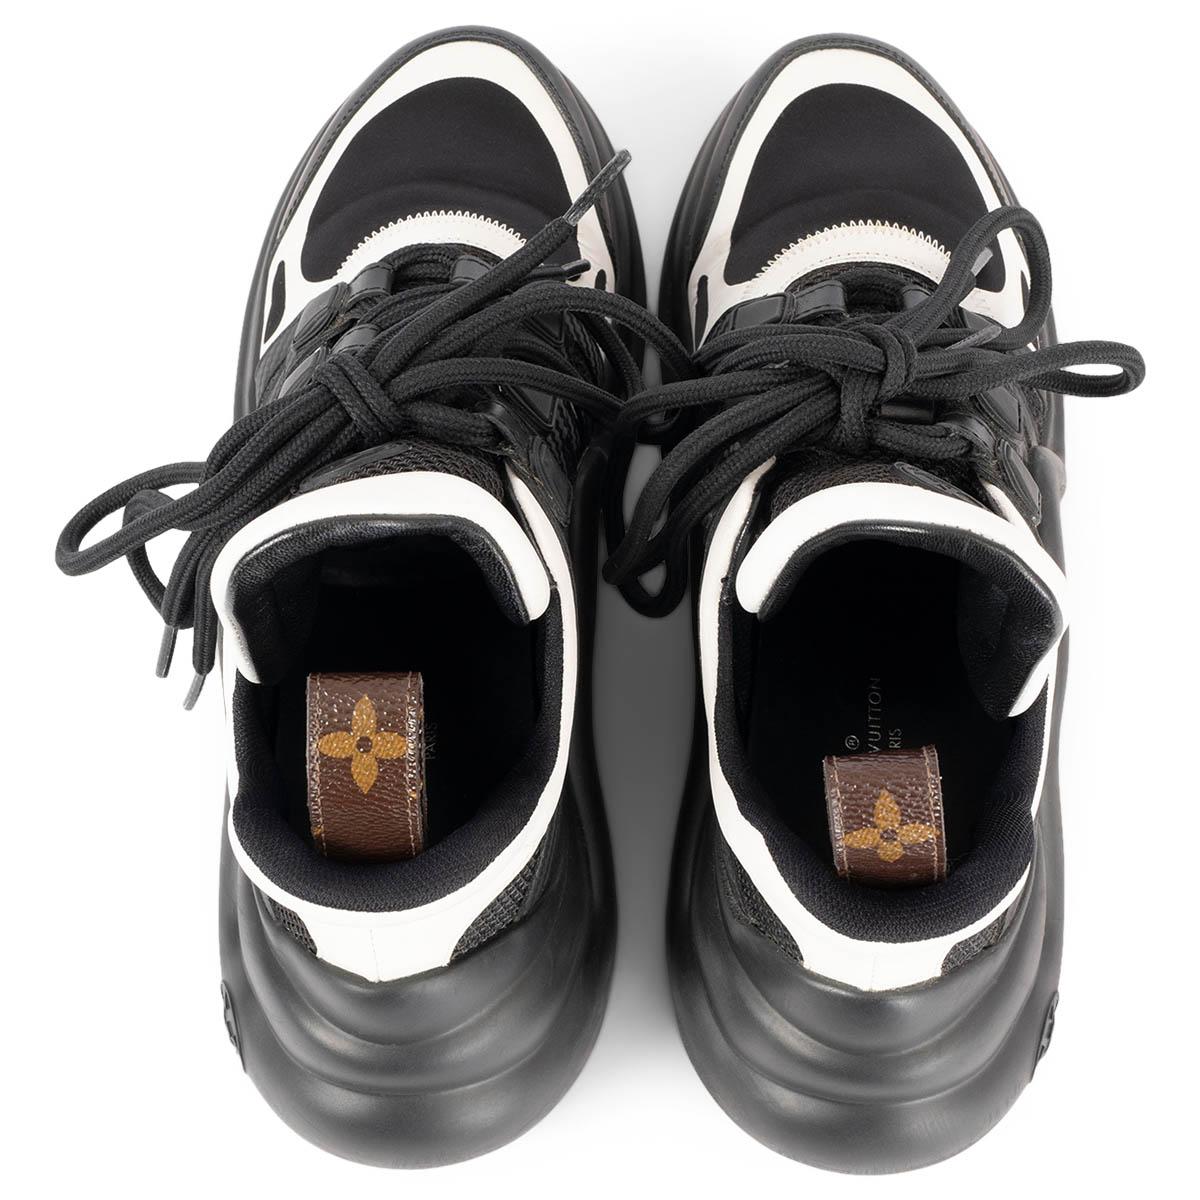 LOUIS VUITTON black & white leather & mesh ARCHLIGHT Shoes 36 For Sale 2